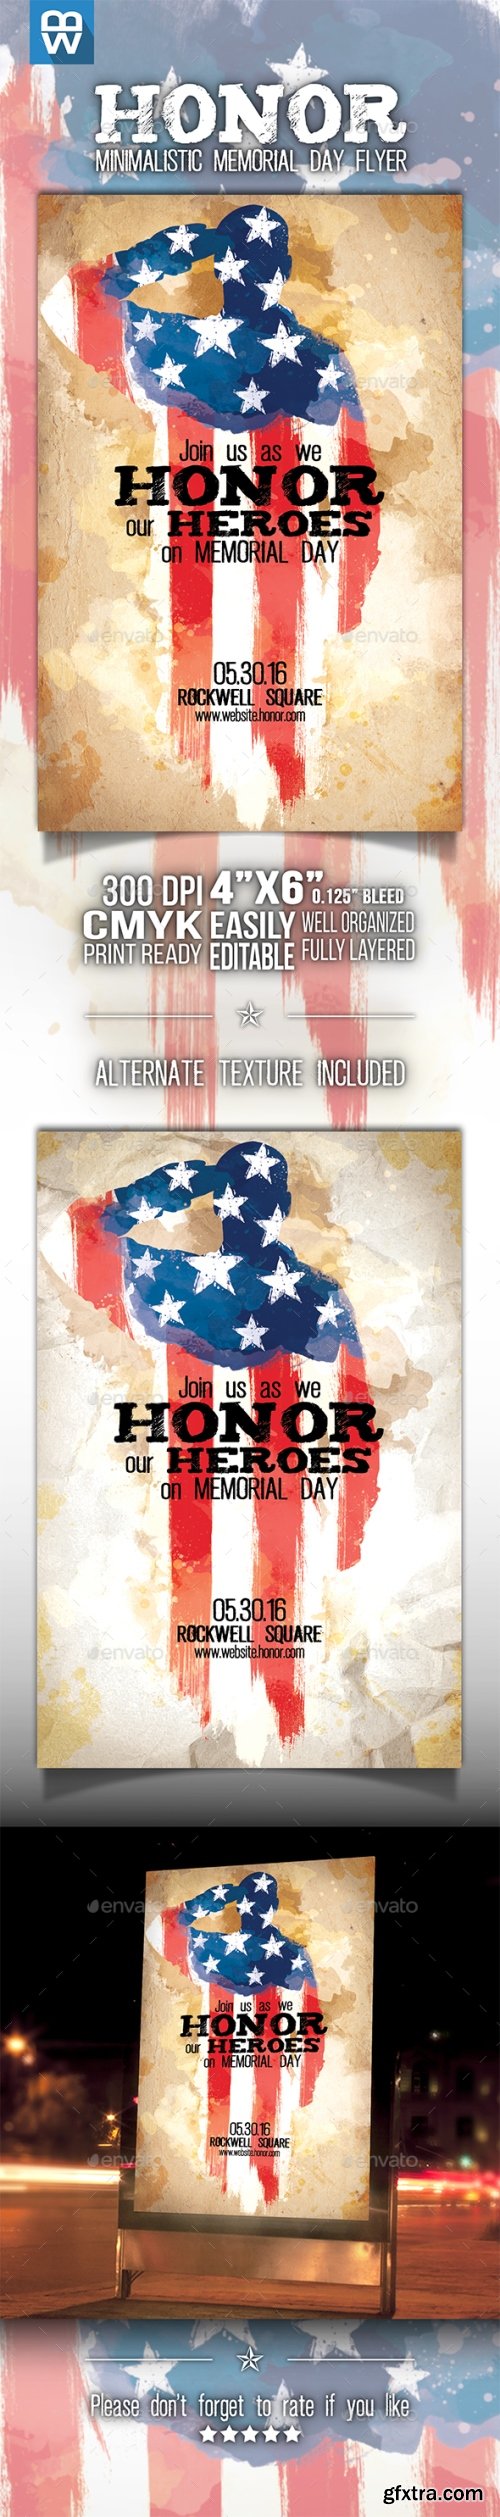 Graphicriver - Honor - Memorial Day Minimalistic Flyer 16010738